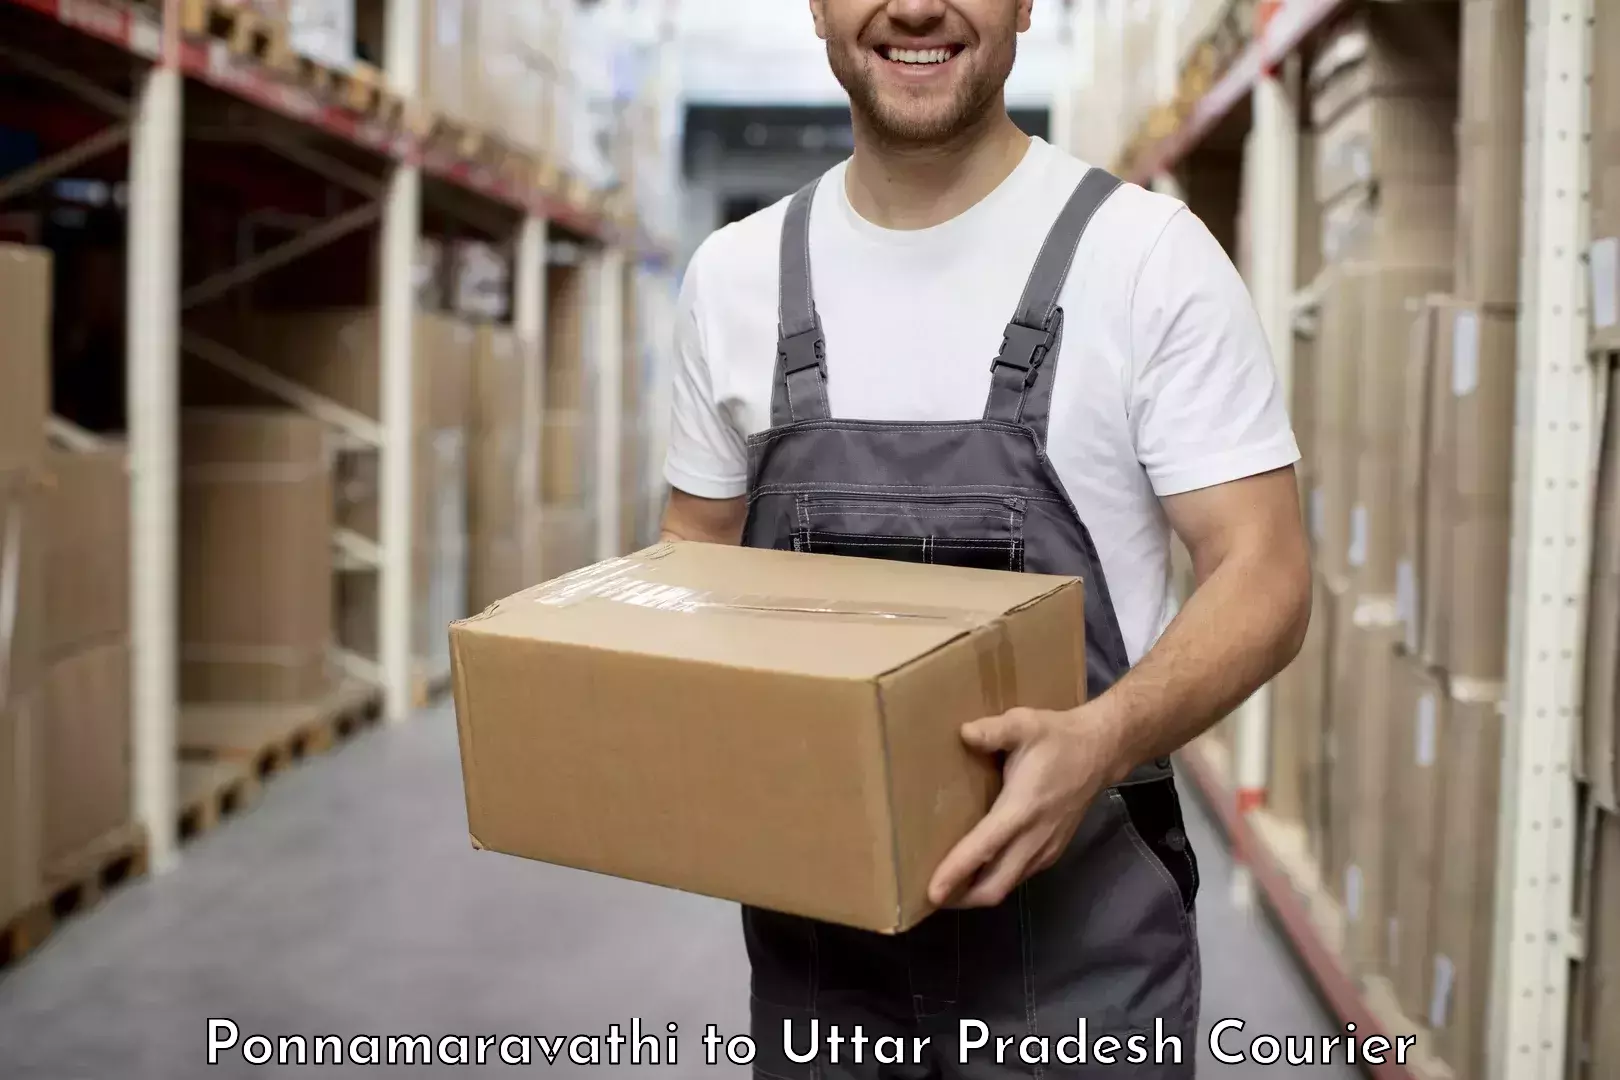 Package delivery network Ponnamaravathi to Amethi